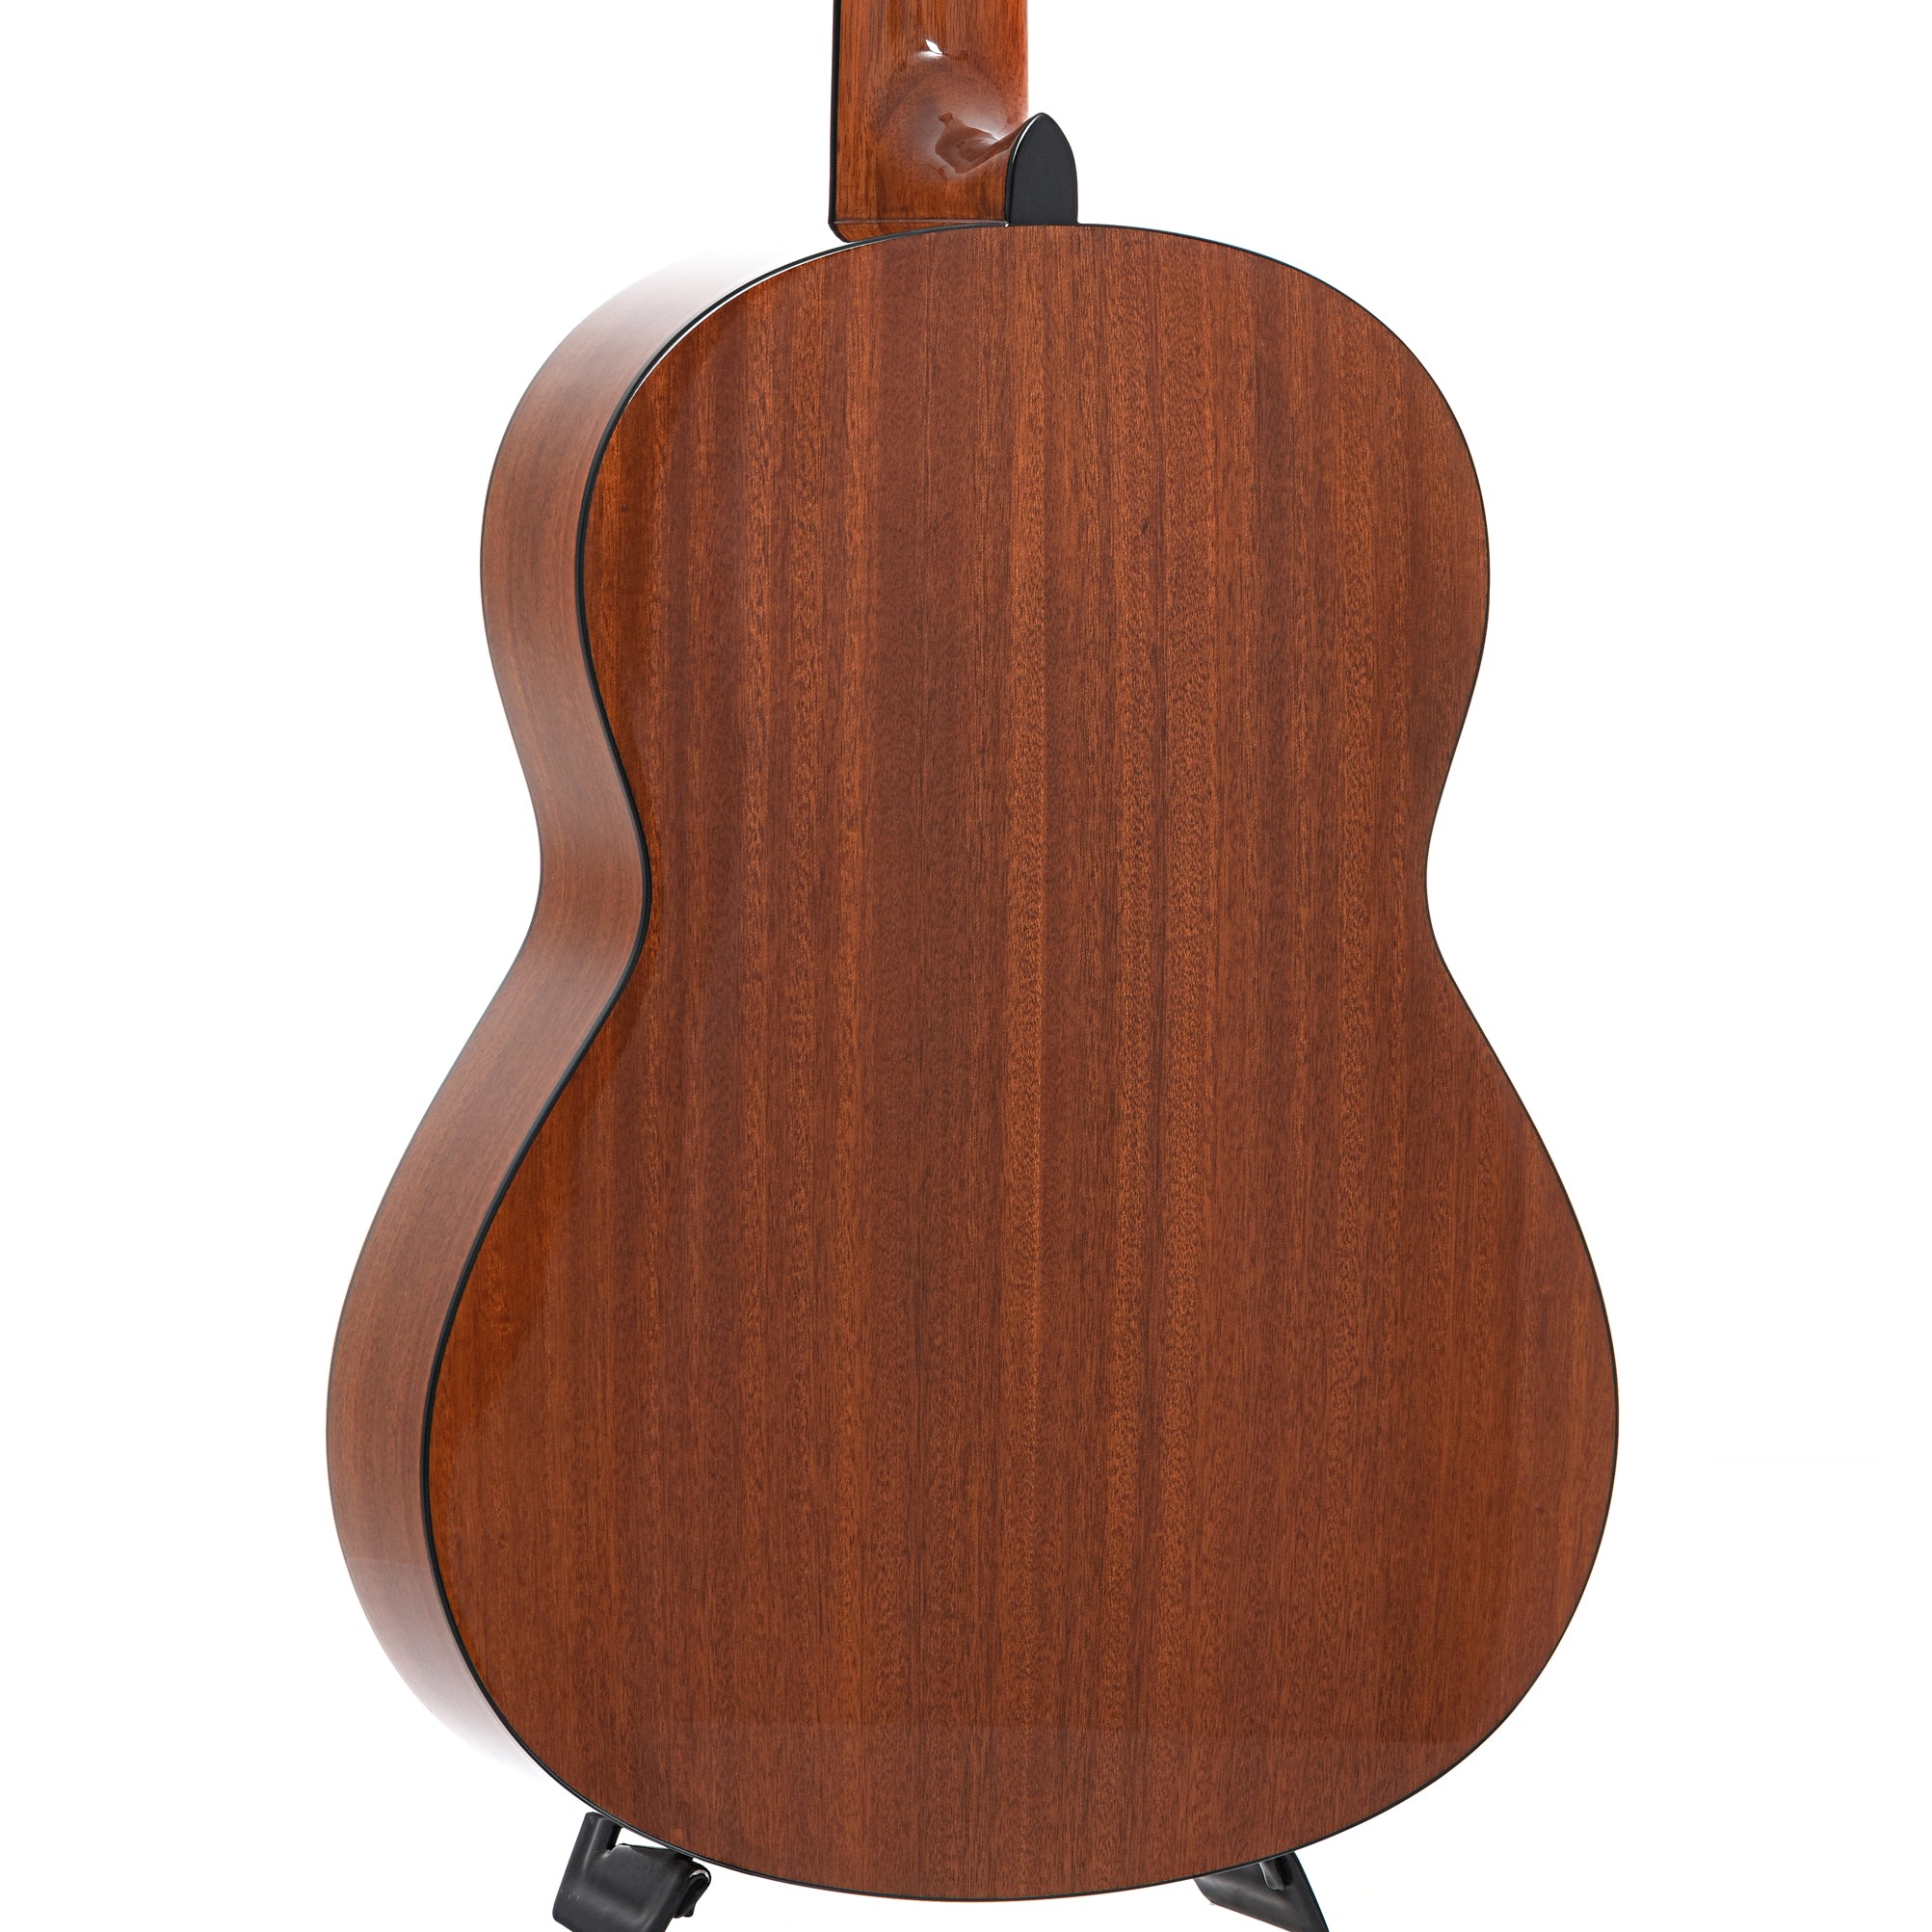 Yamaha CG131S Classical Guitar (2007) – Elderly Instruments